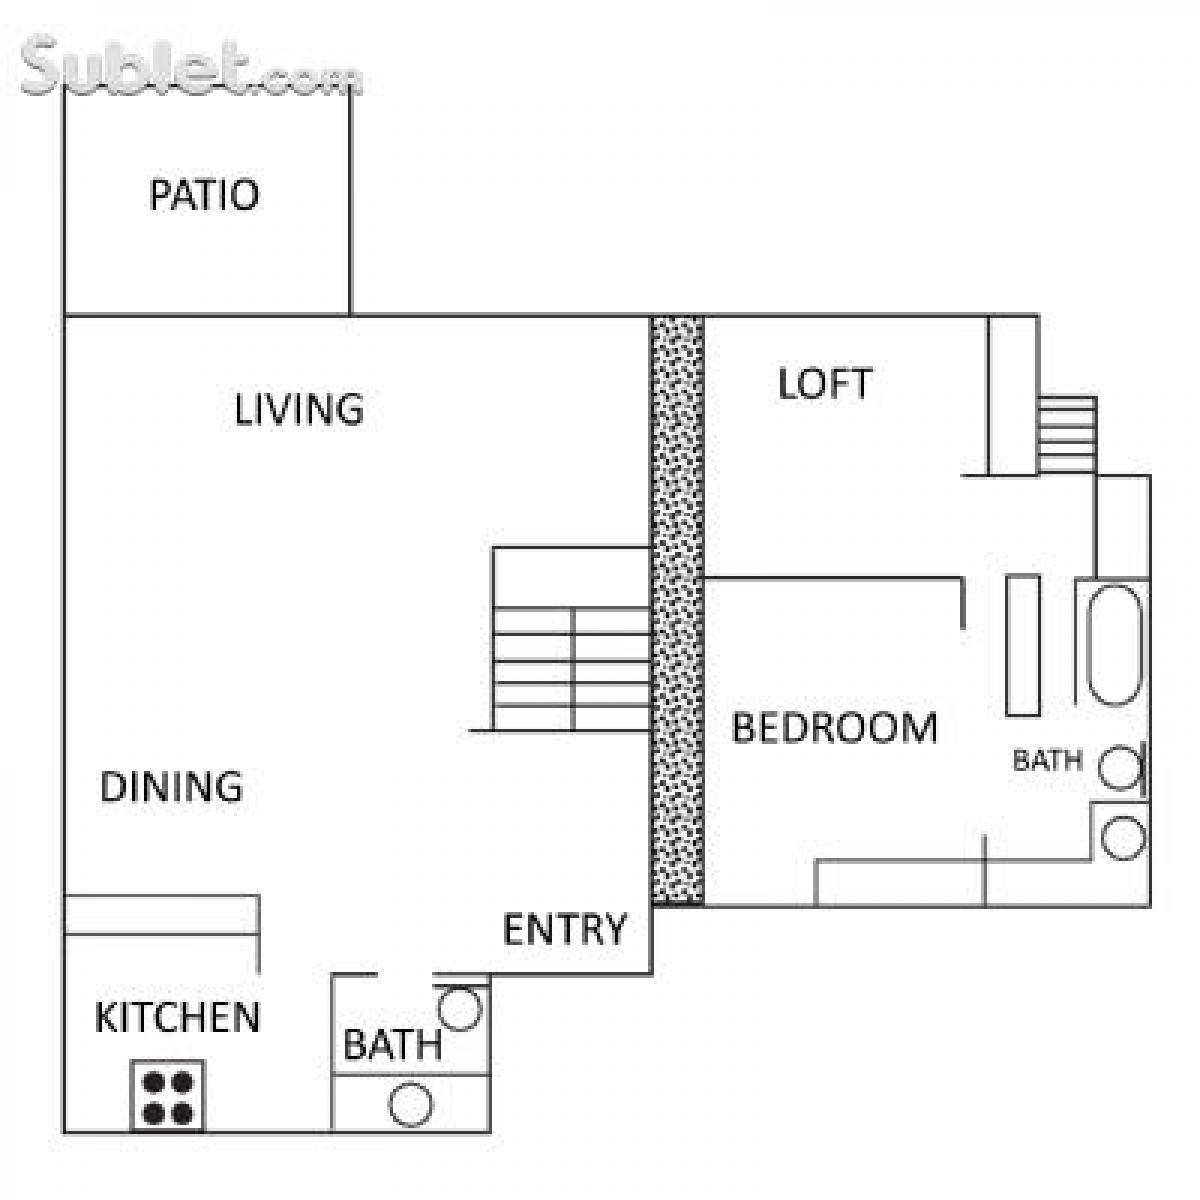 Picture of Apartment For Rent in Ventura, California, United States